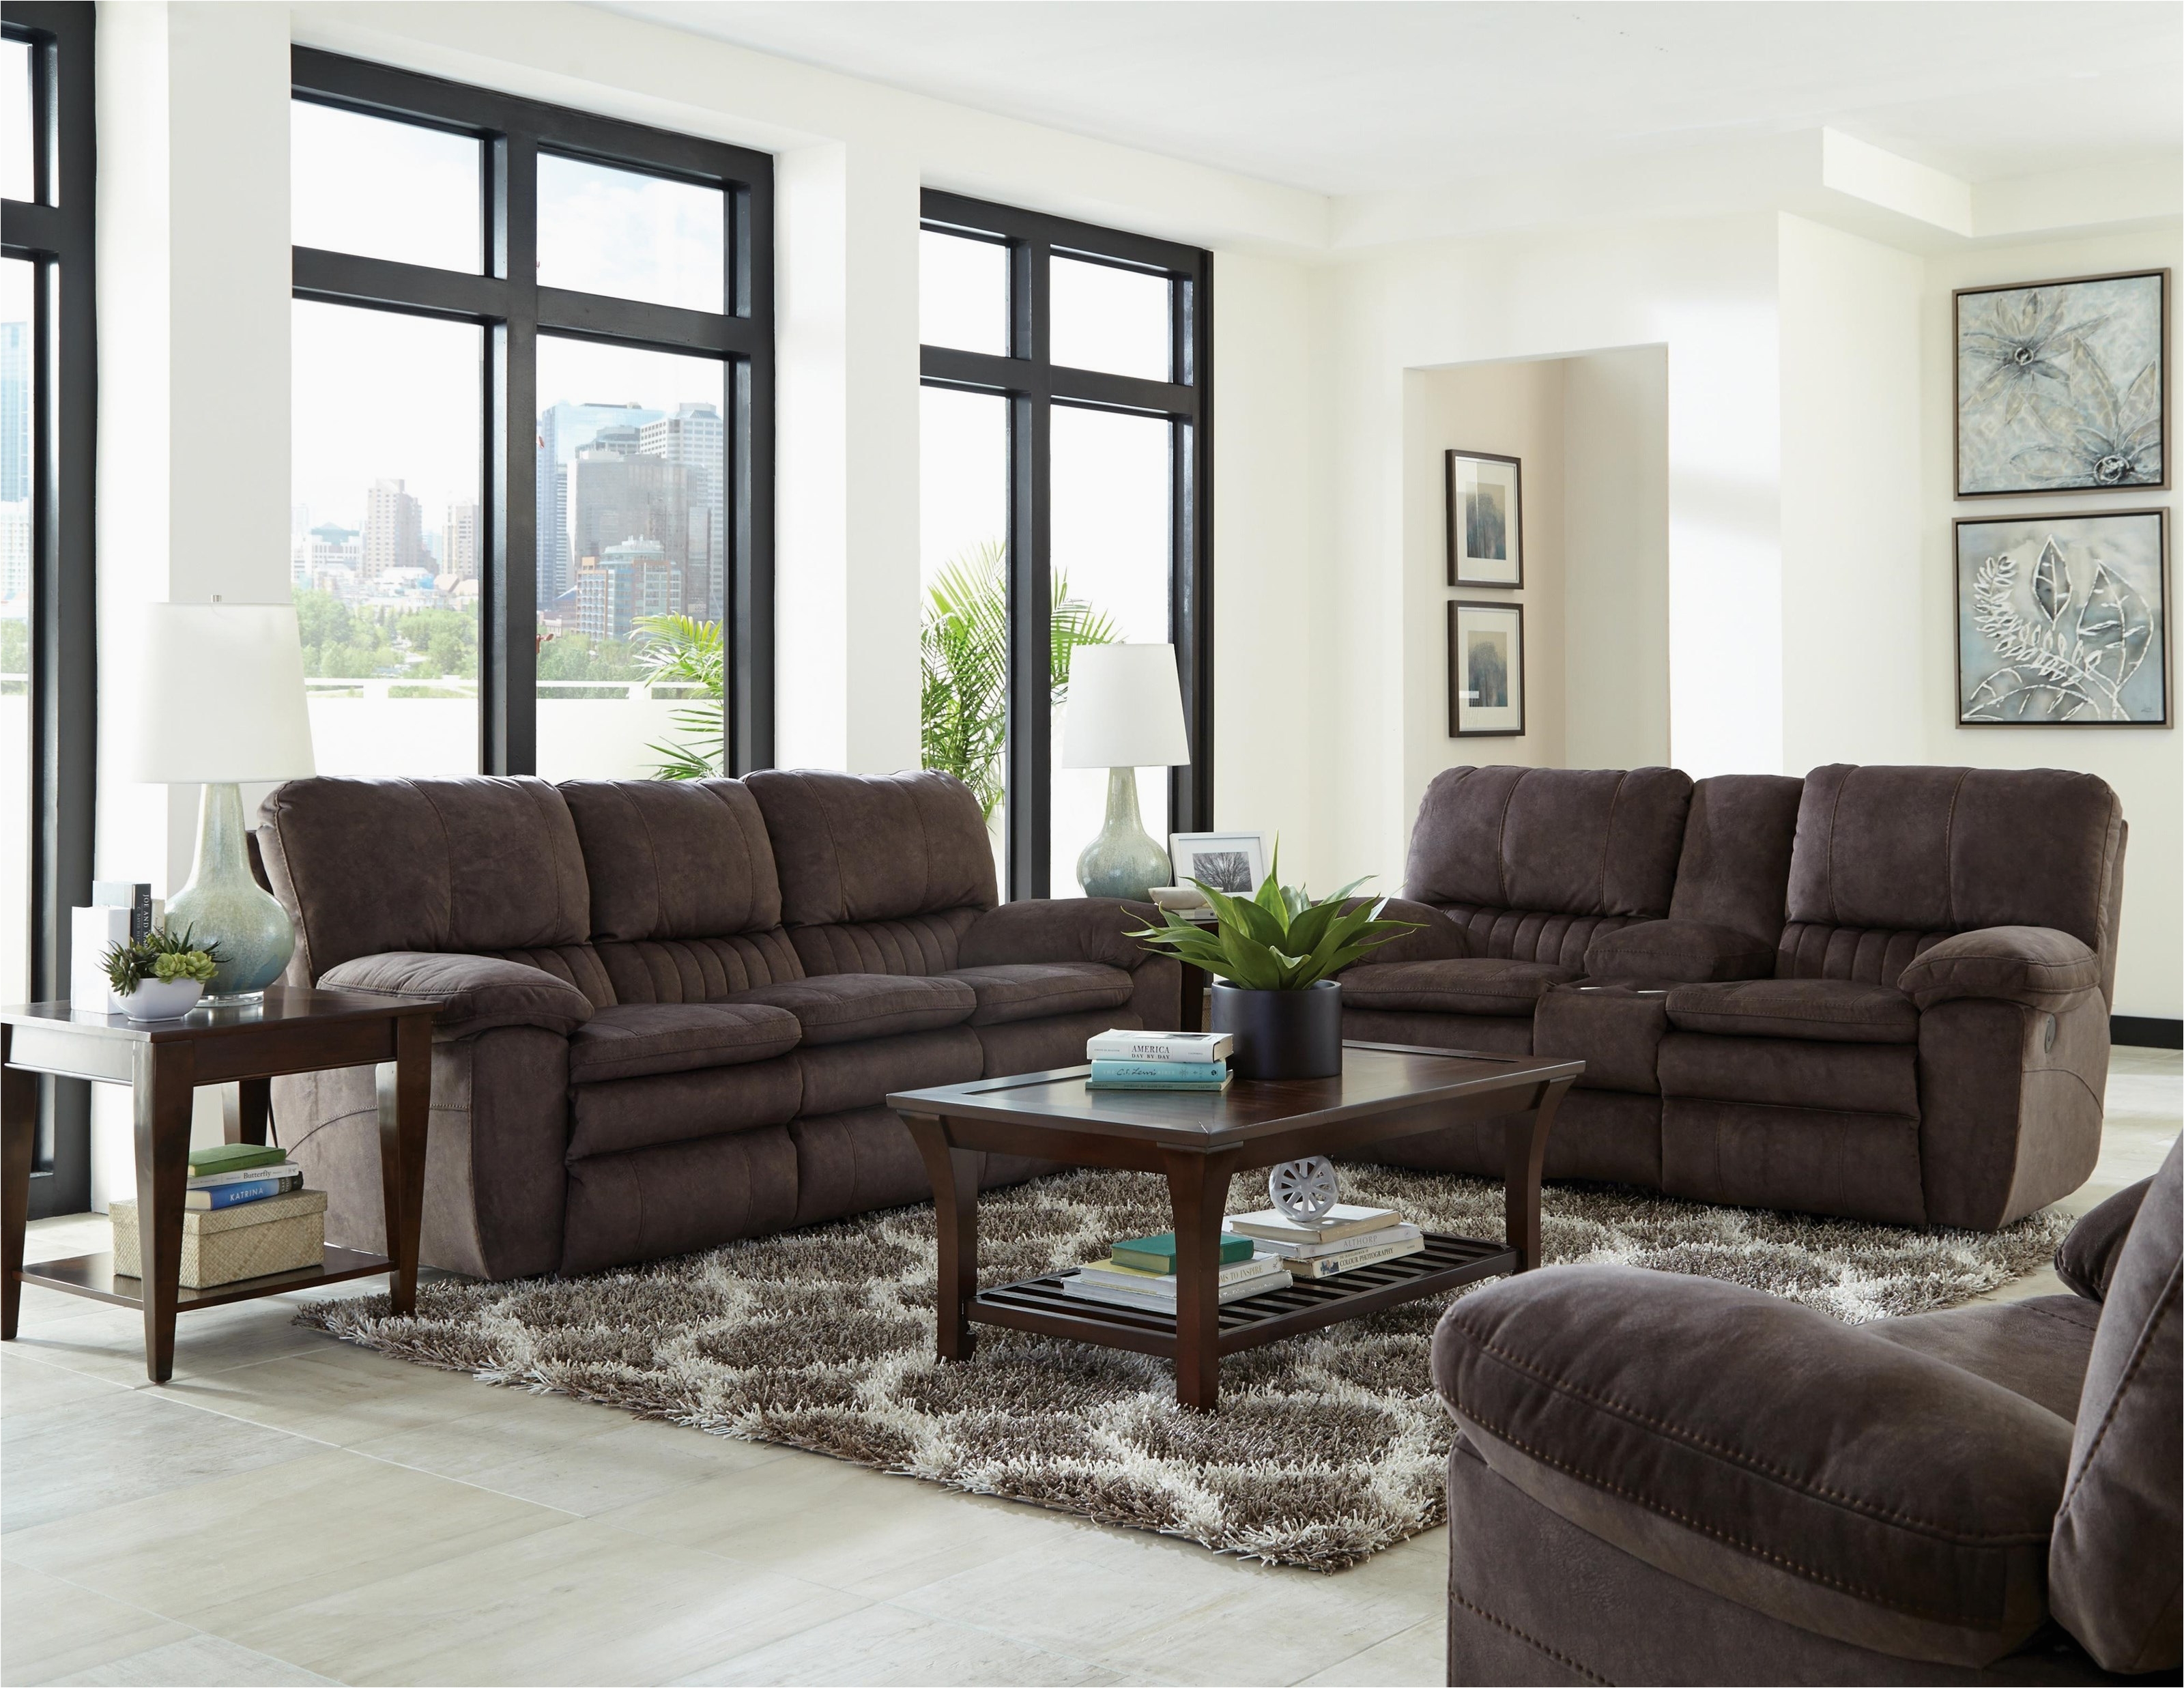 ashley furniture richmond va fresh sofa design best furniture stores in virginia best furniture gallery of